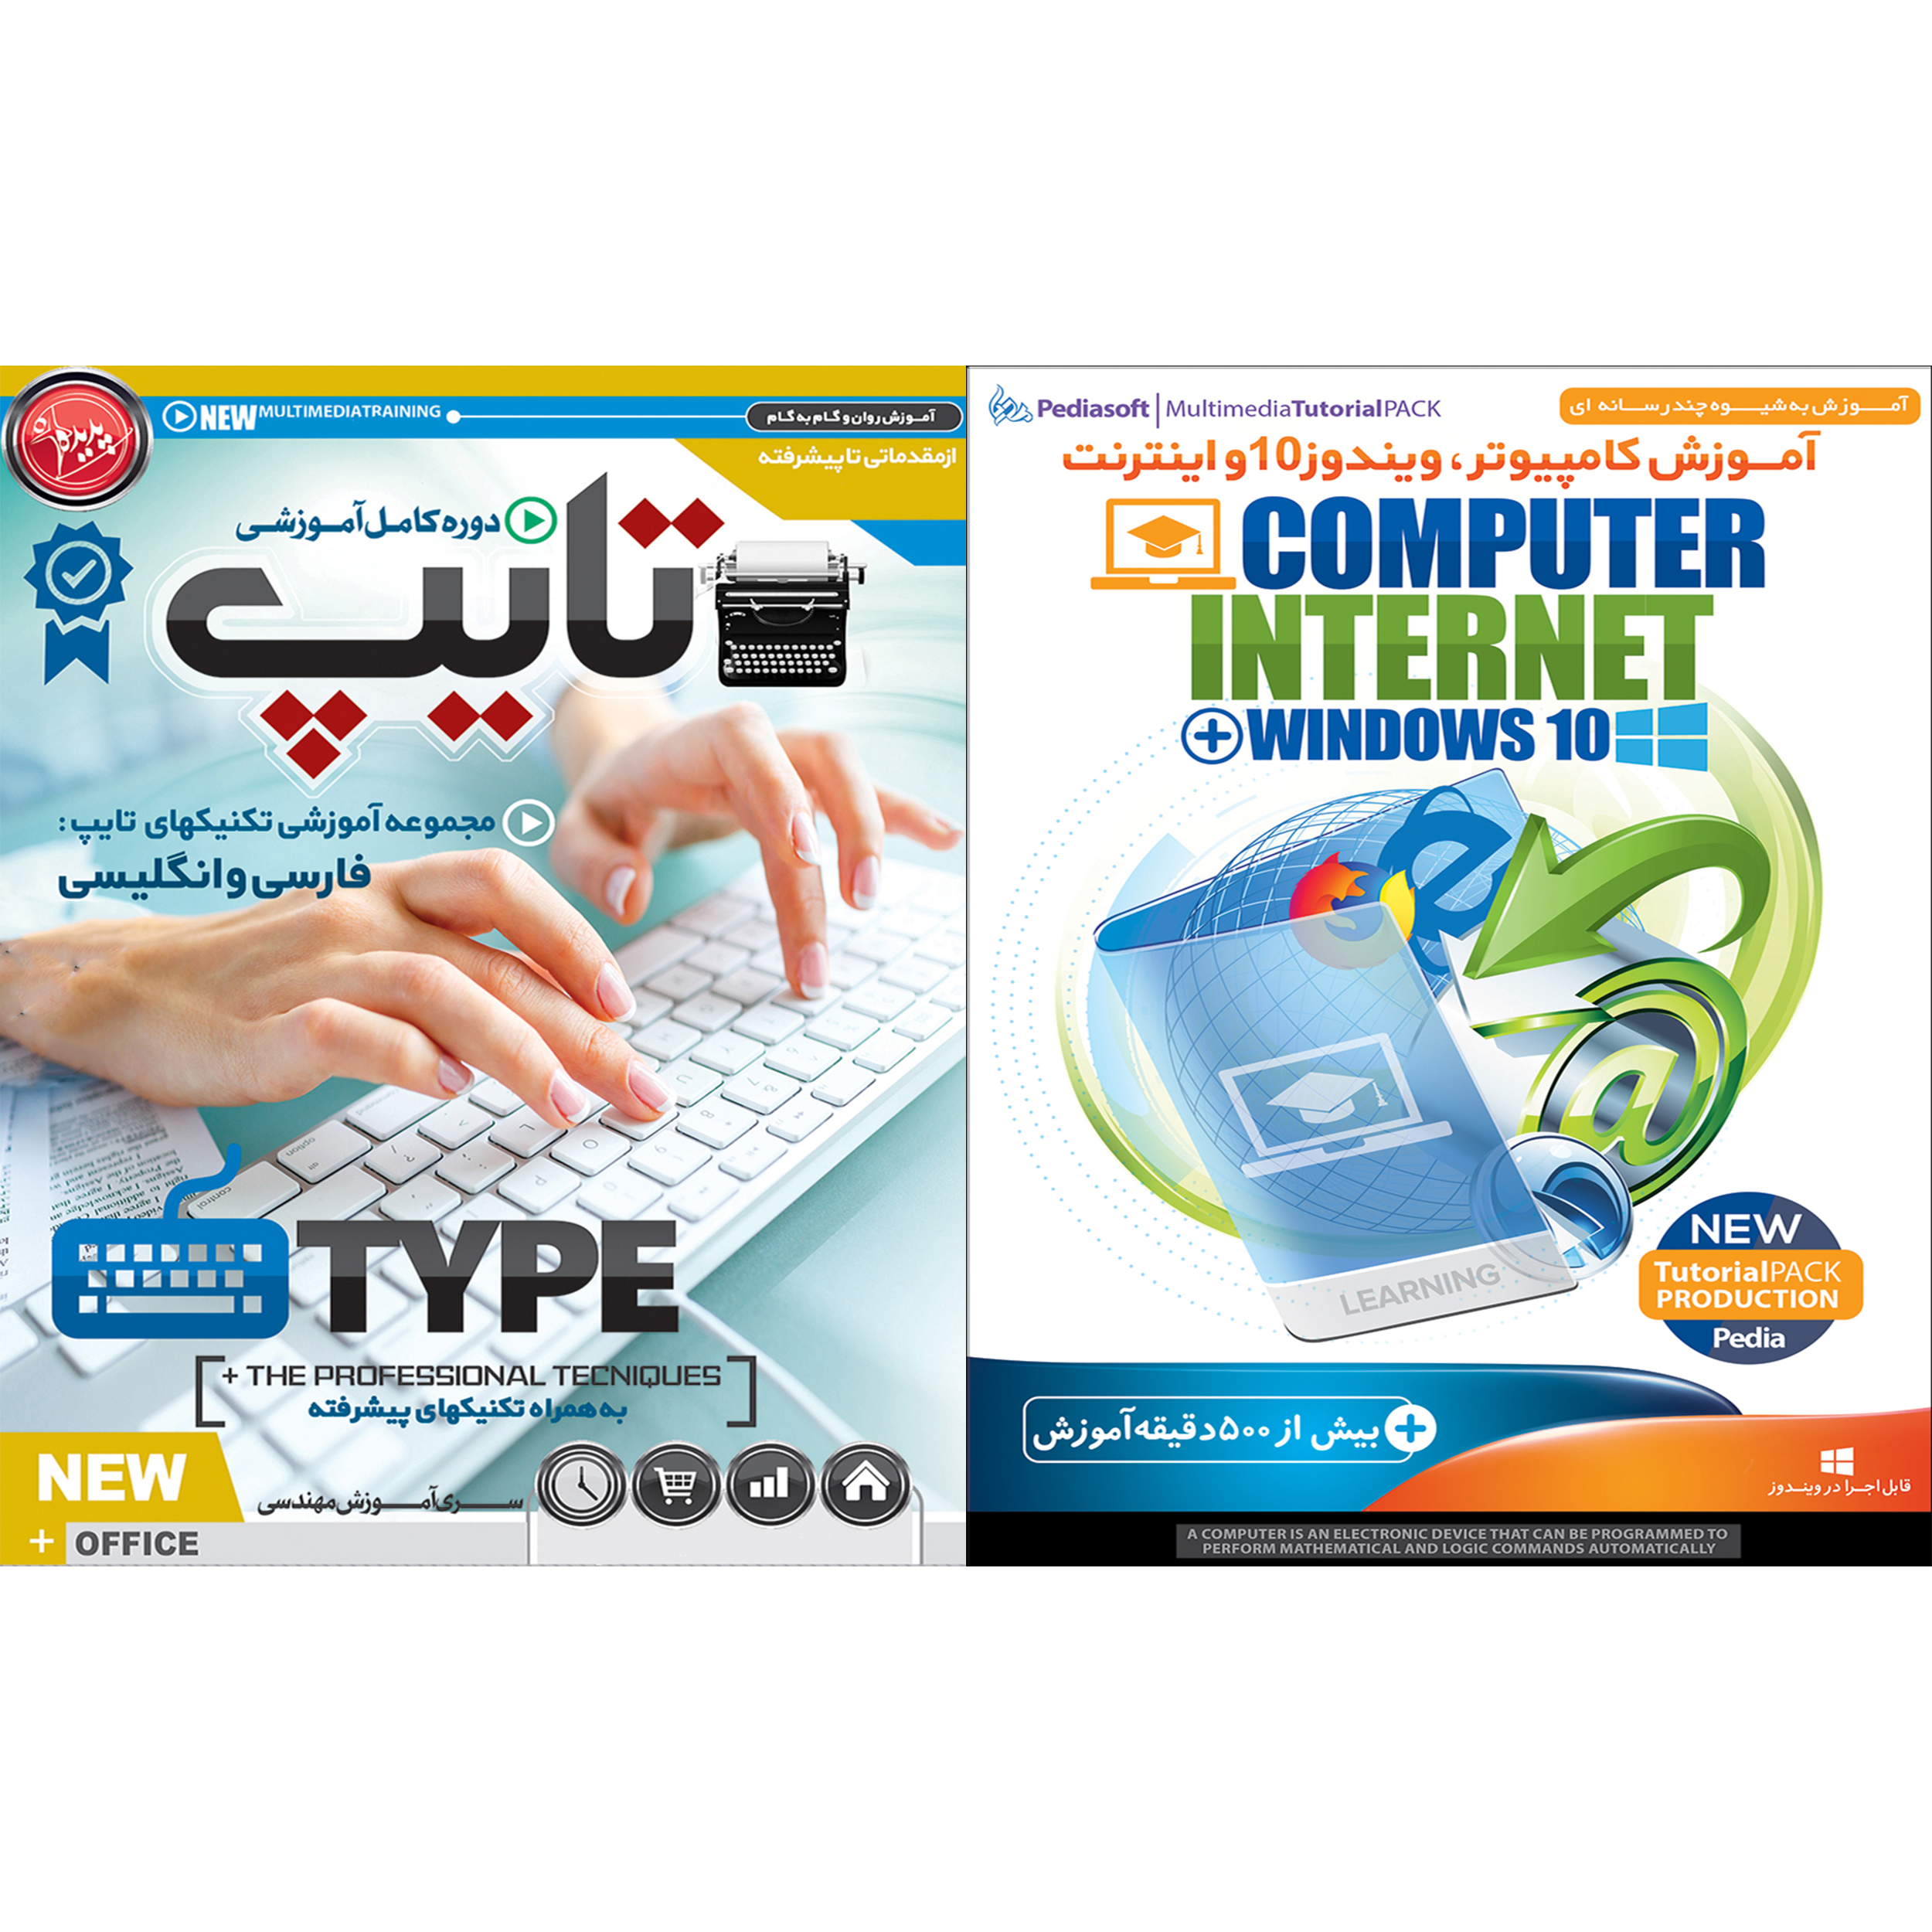 نرم افزار آموزش کامپیوتر ویندوز 10 و اینترنت نشر پدیا سافت به همراه نرم افزار آموزش تایپ نشر پدیده